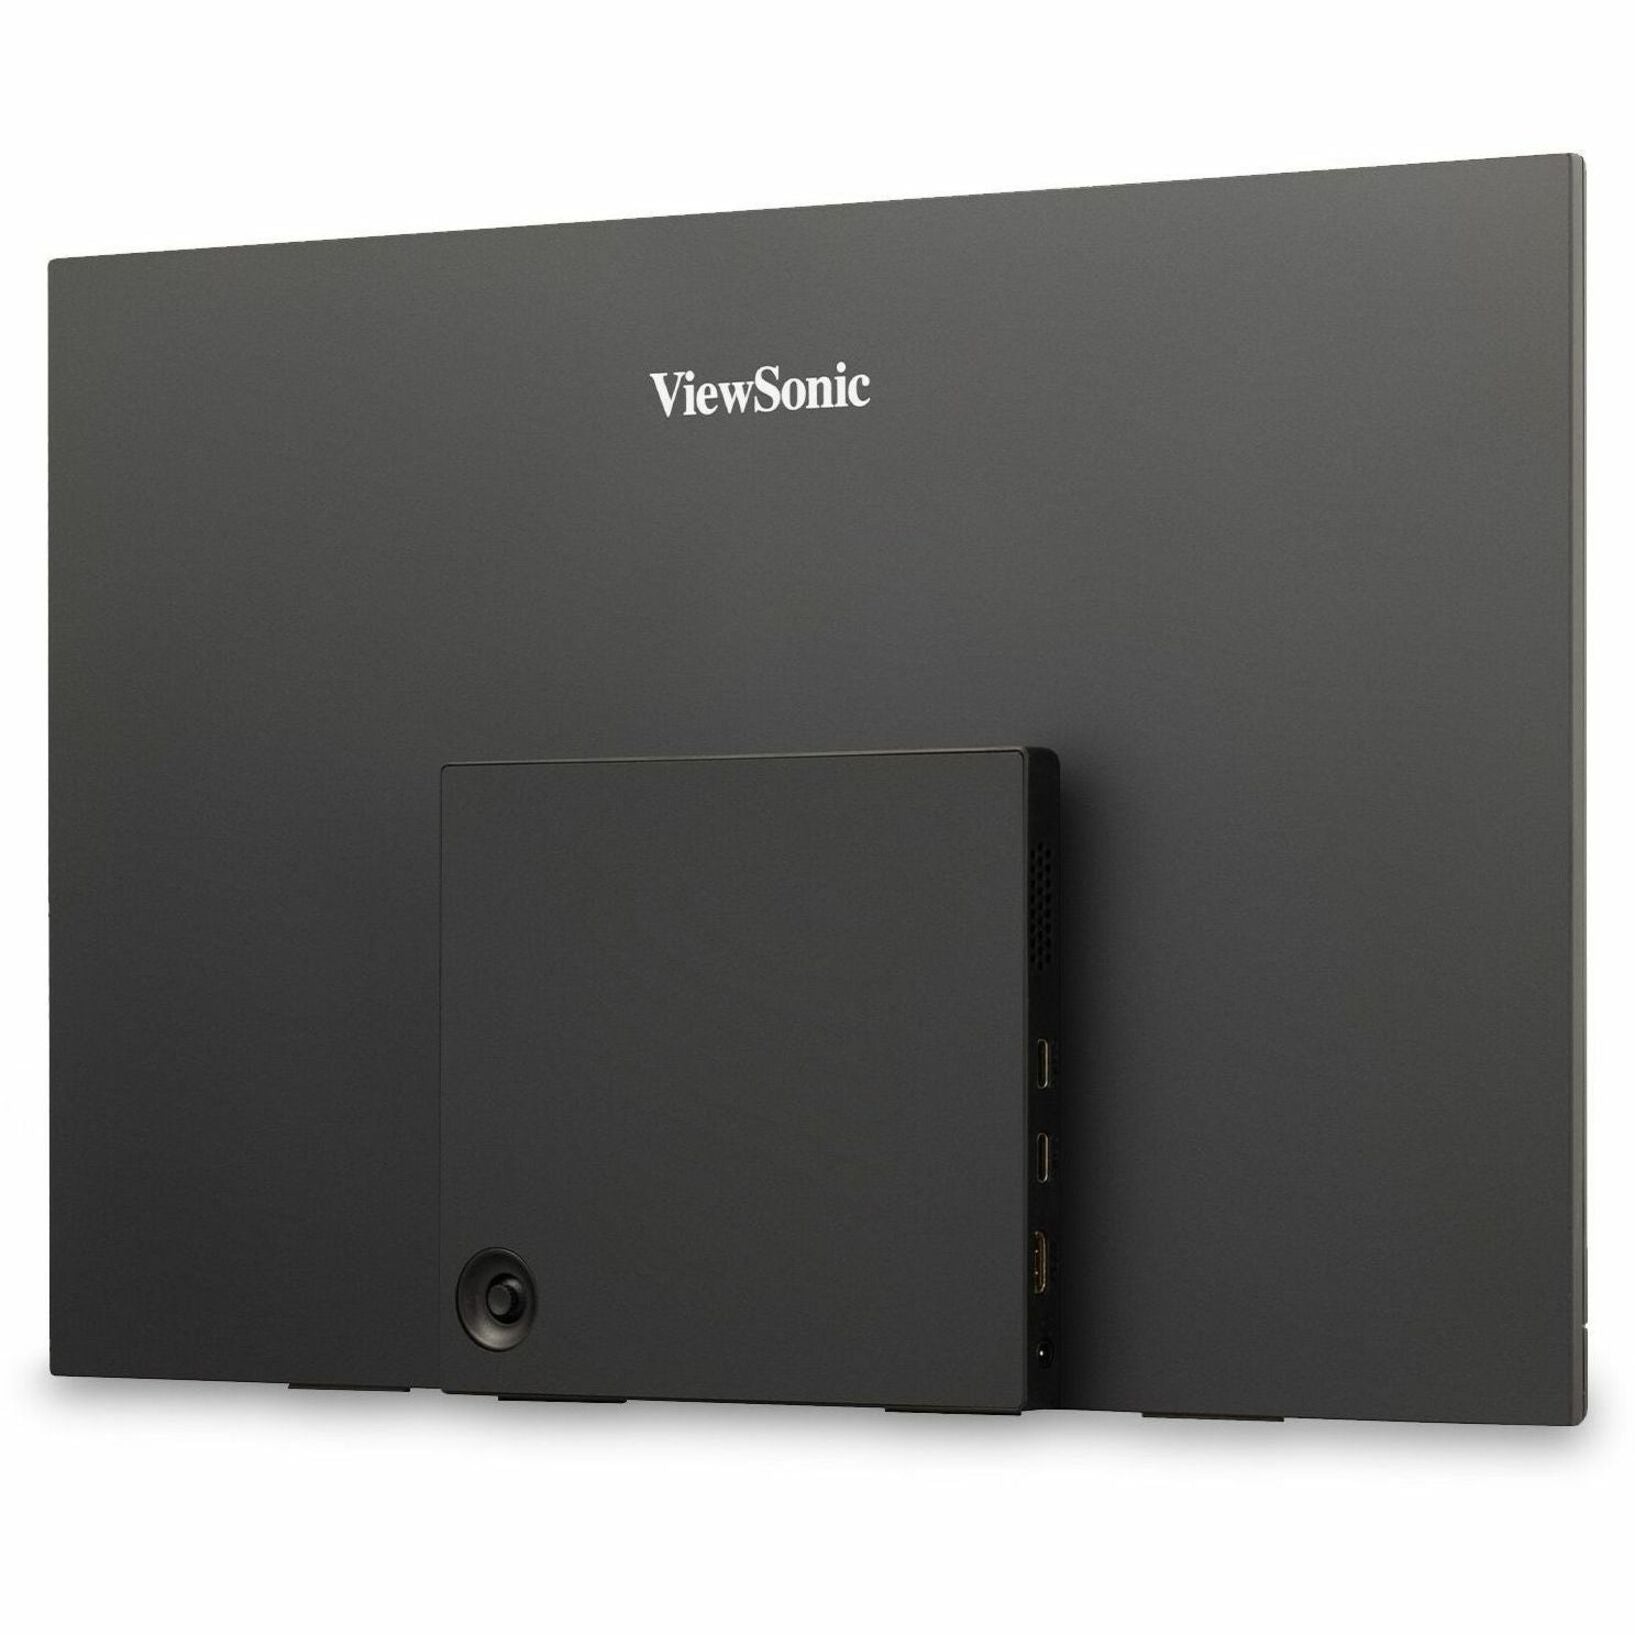 Monitor de juego LED ViewSonic VX1655-4K Monitor portátil UHD 4K de 15.6" con USB C de 60W y mini HDMI. Marca: ViewSonic.